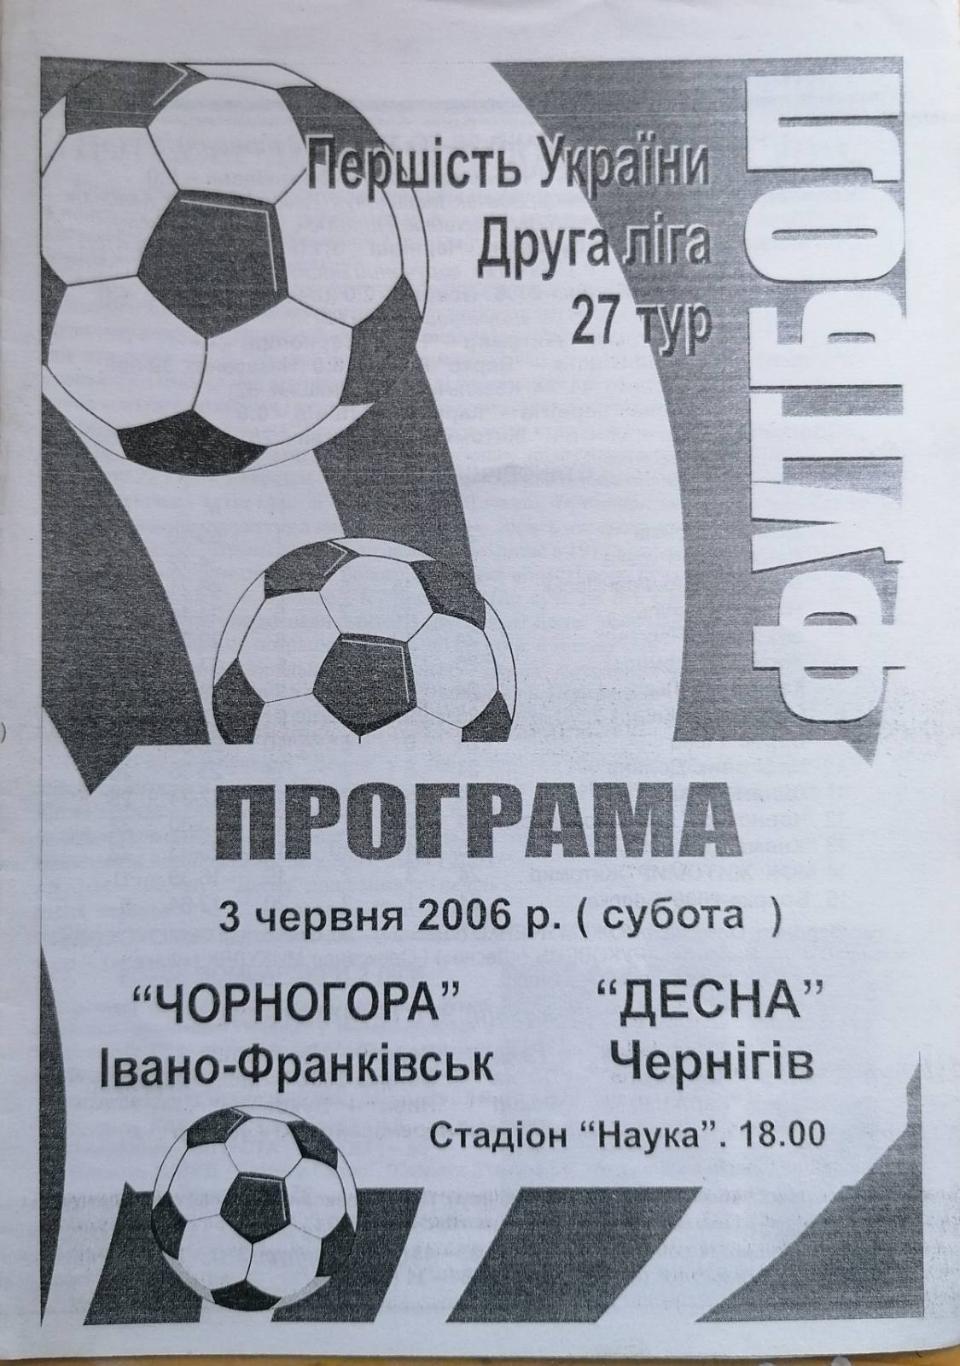 Чорногора Ивано-Франковск- Десна Чернигов. 03.06.2006..